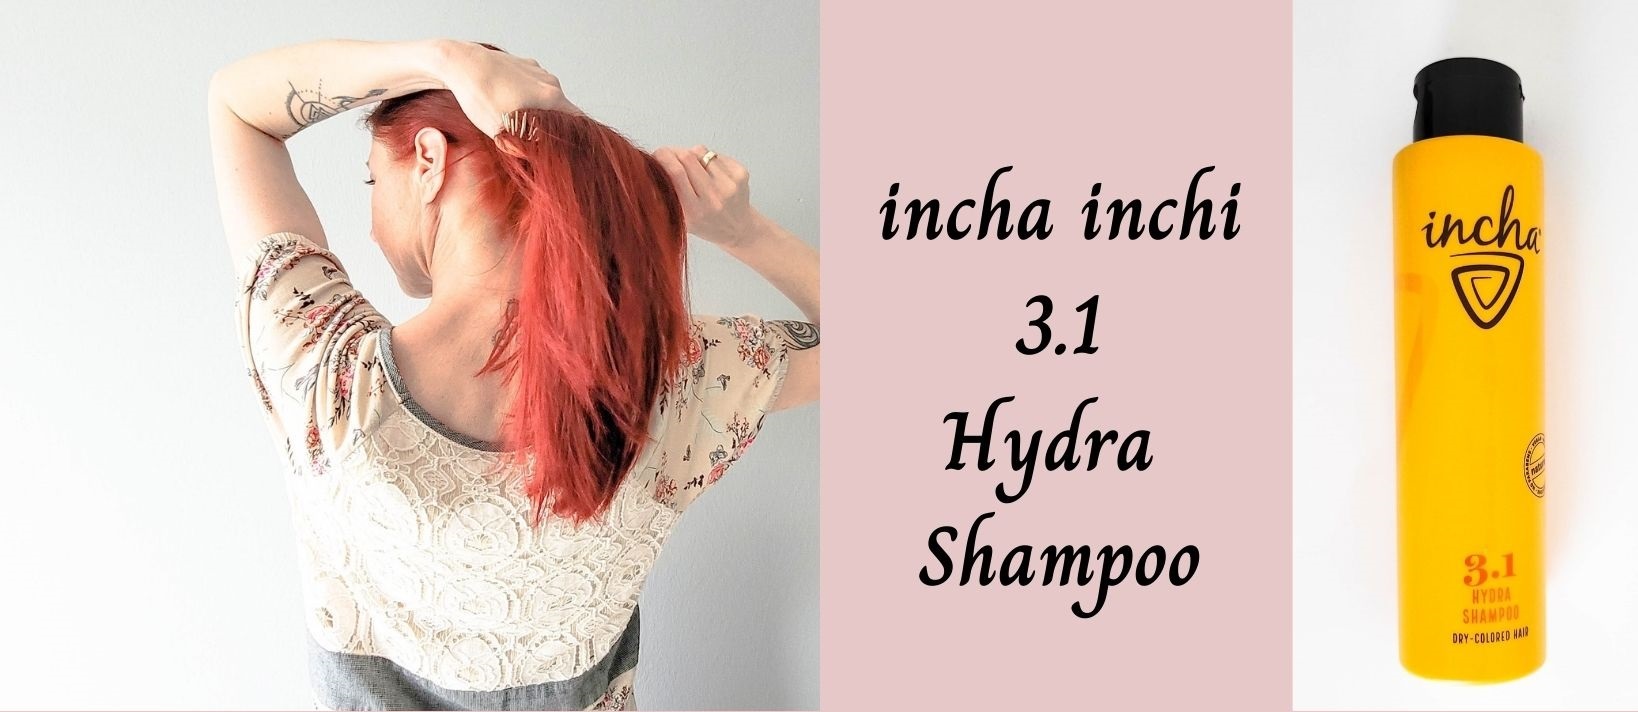 incha inchi 3.1. Hydra Shampoo Marisco Naturkosmetik